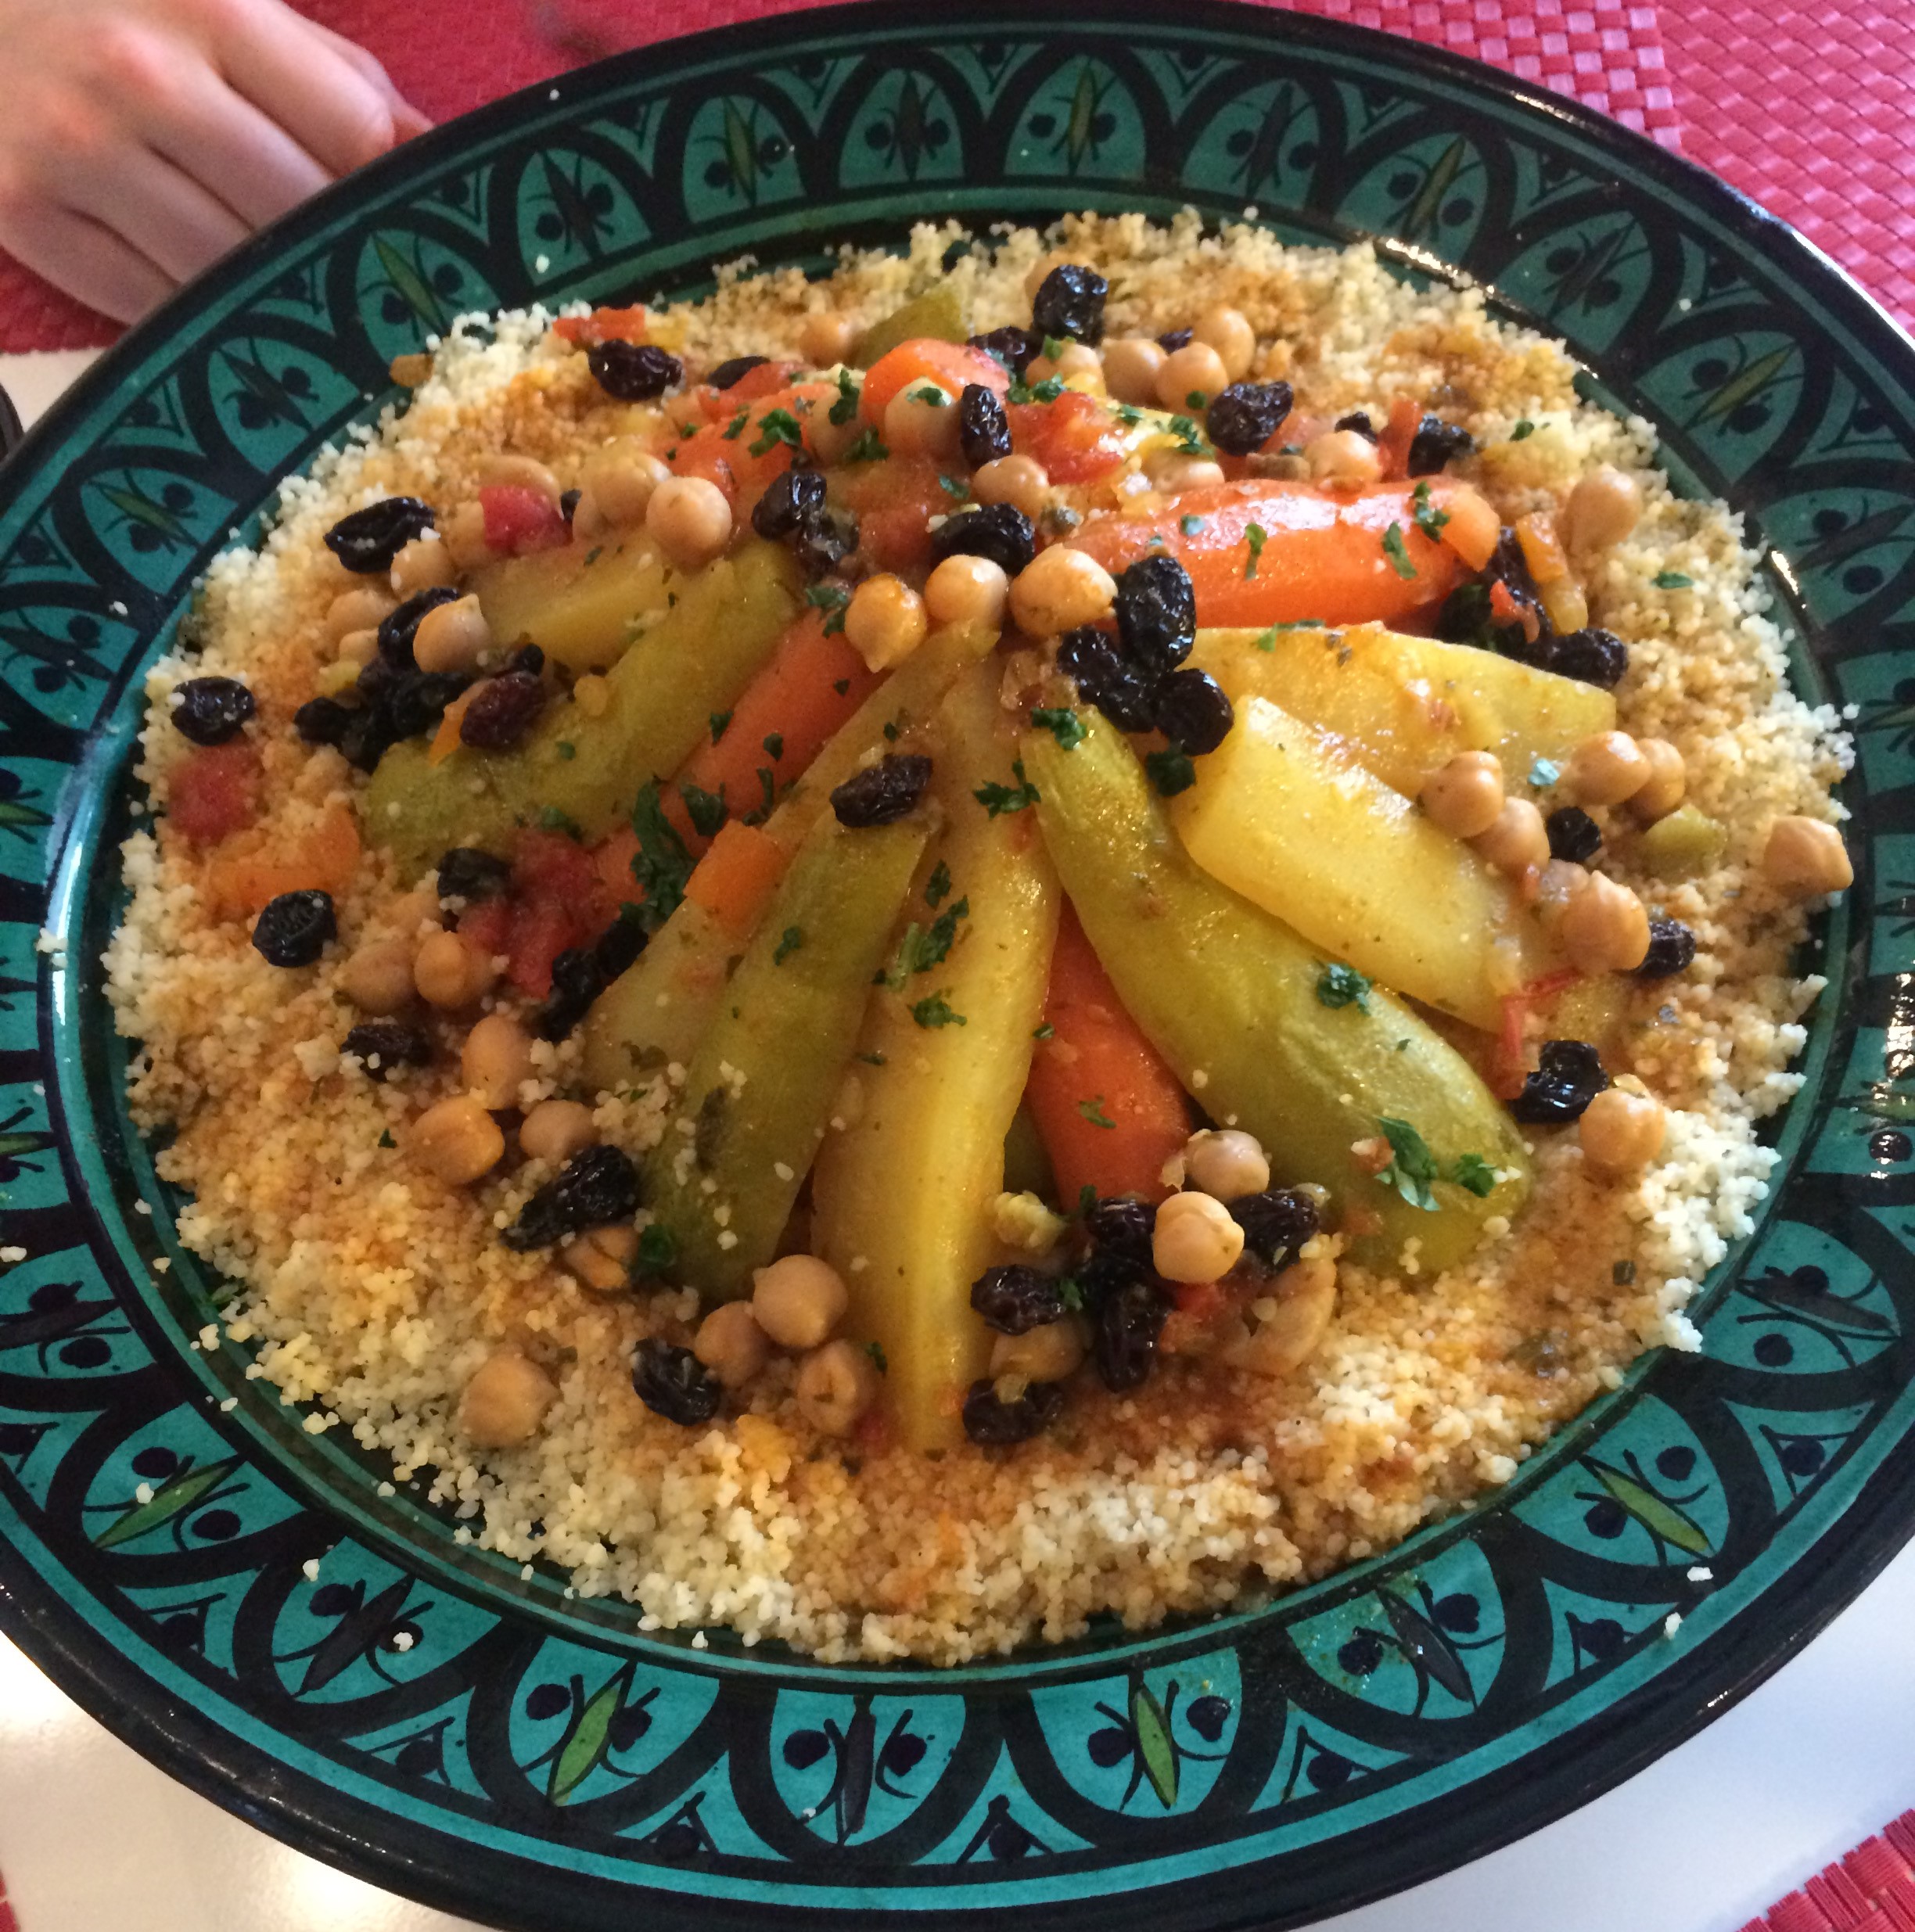 Yasalam! Traditionel marokkansk couscous - Yasalam!